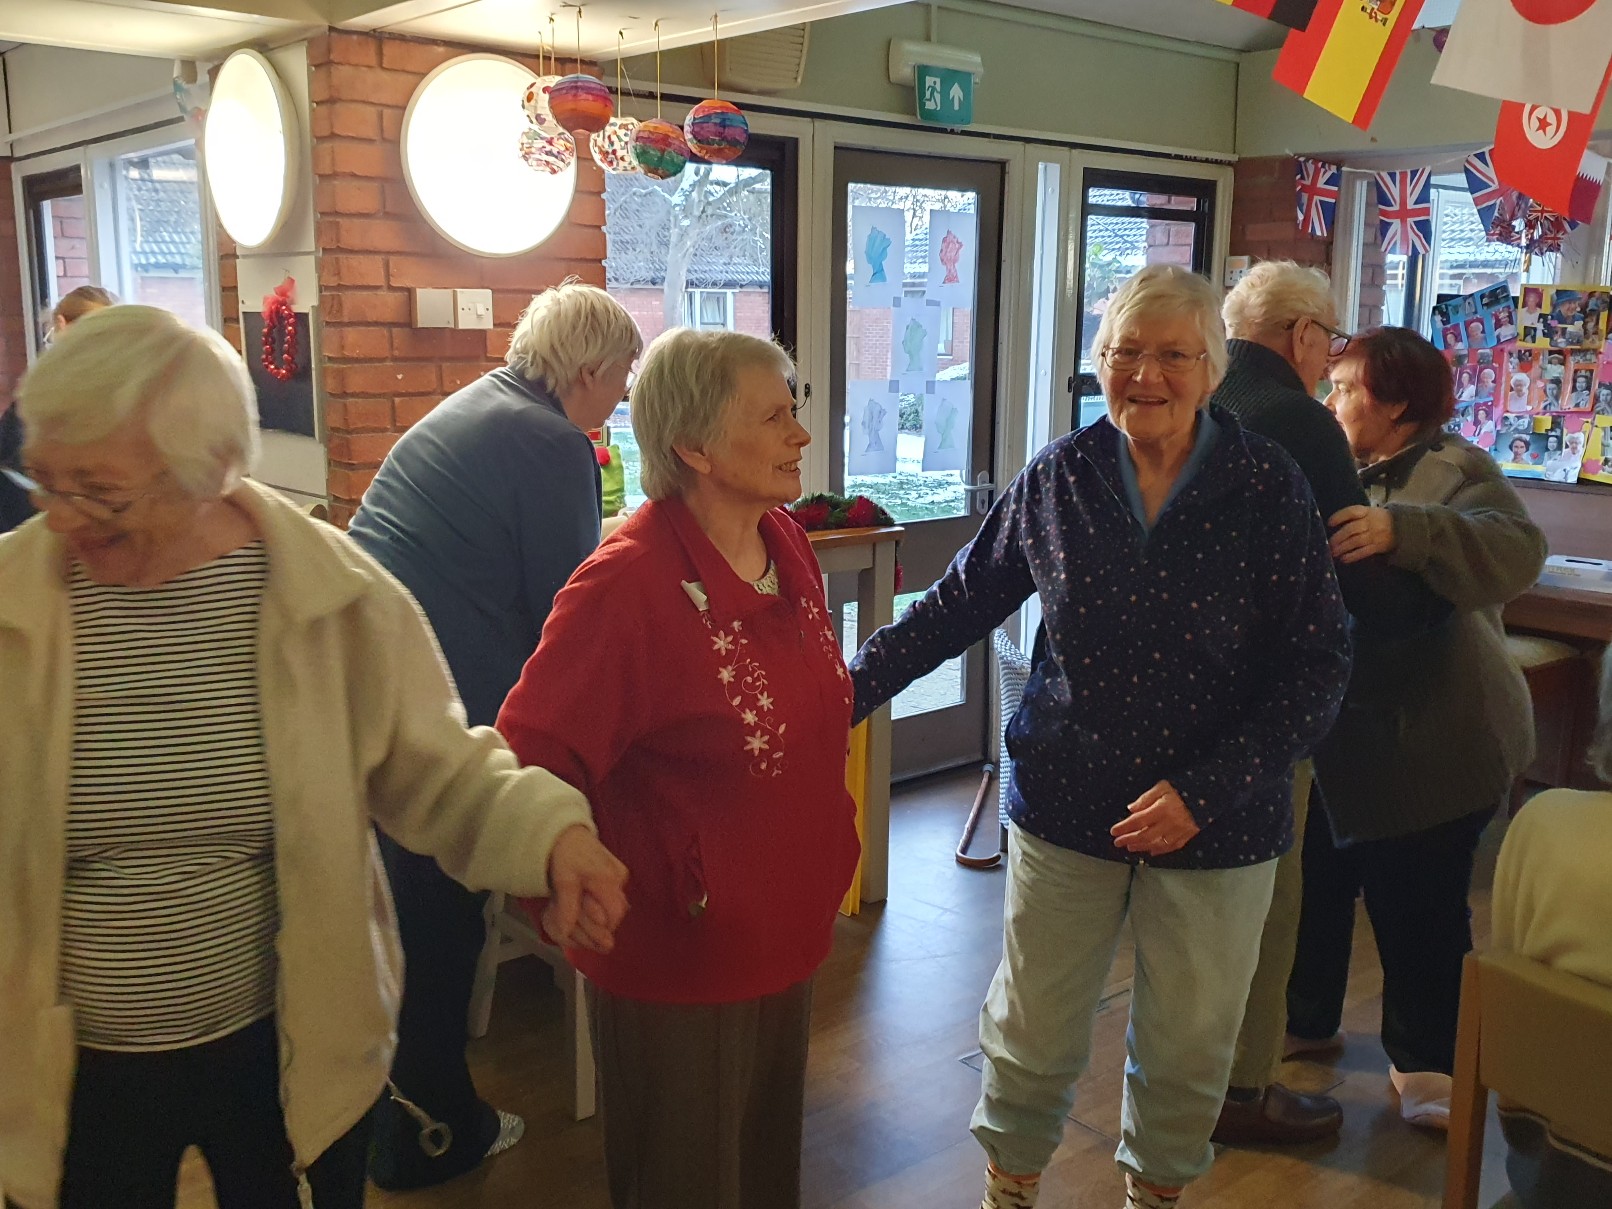 Residents dancing